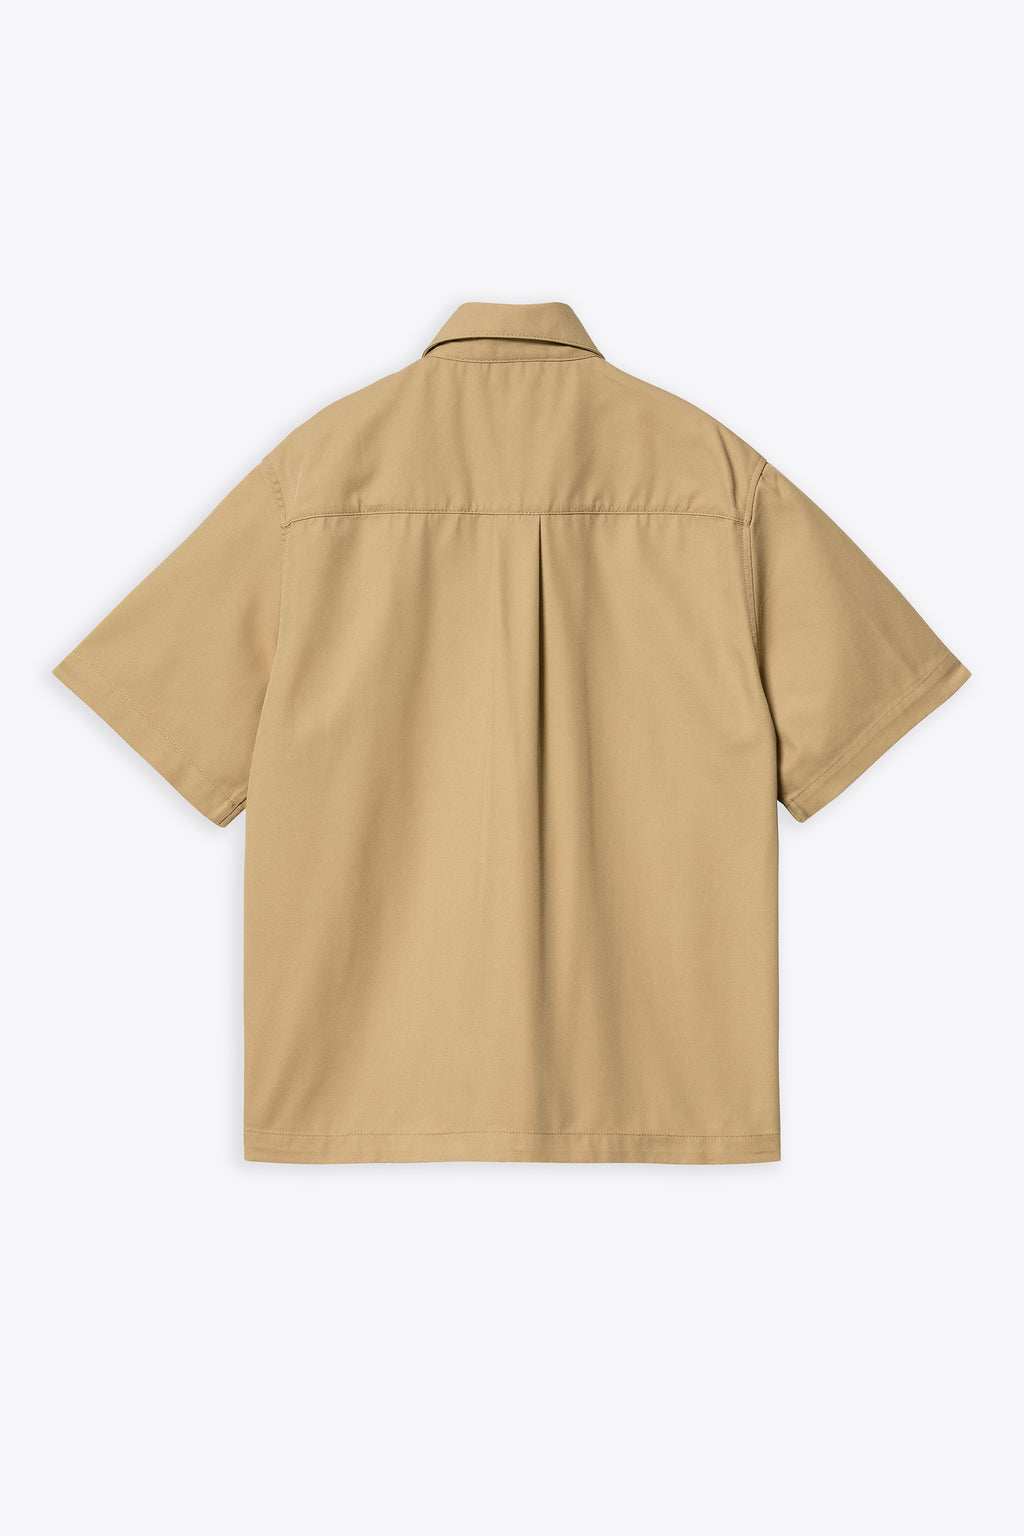 alt-image__Shirt-sleeeves-beige-twill-shirt-with-zip---/S-Sandler-Shirt